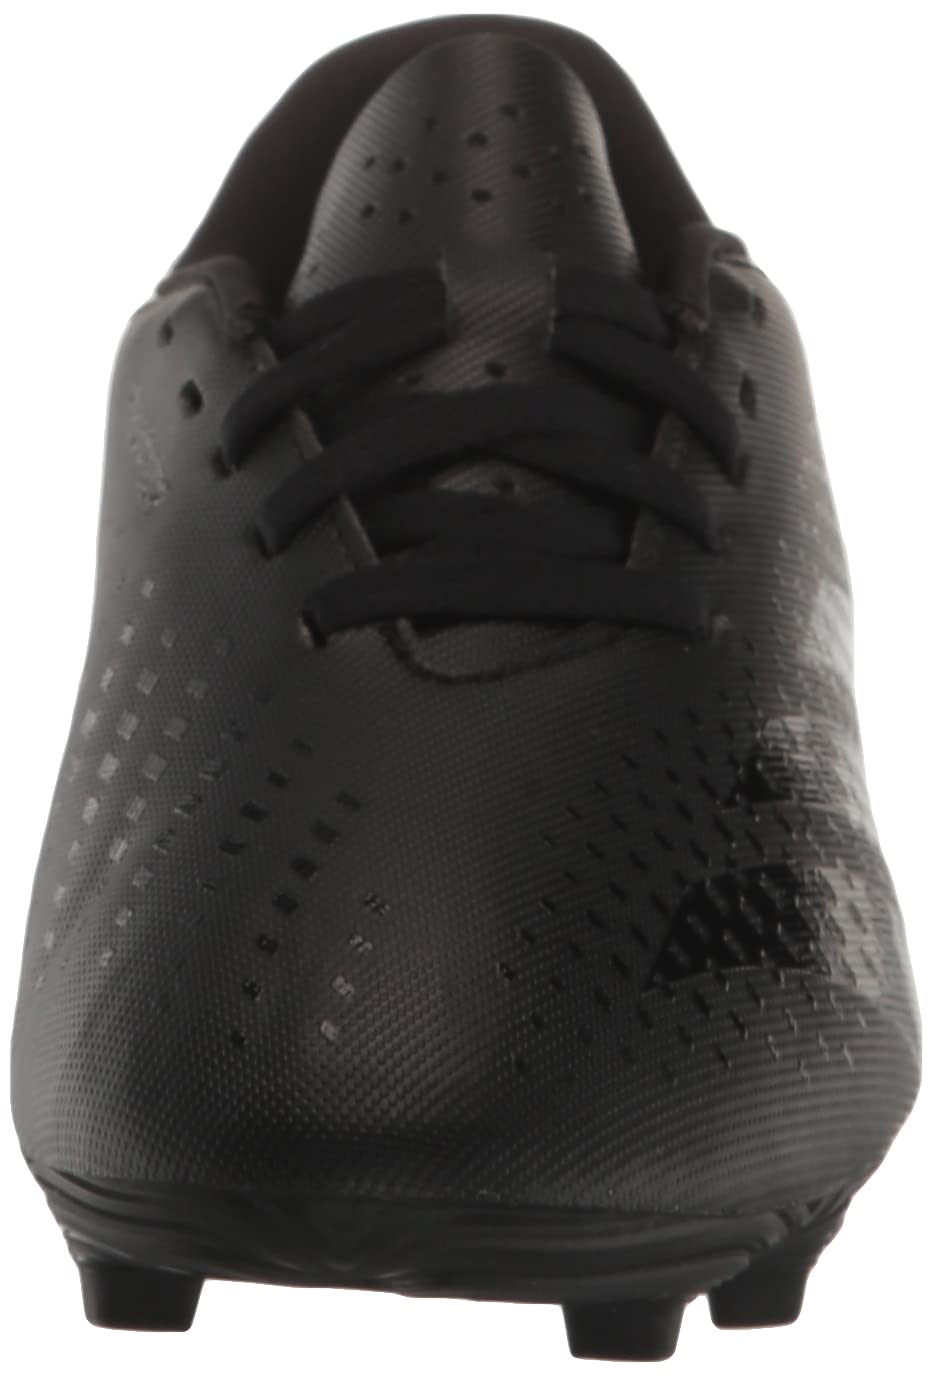 adidas Unisex Predator Accuracy.4 Flexible Ground Soccer Shoe - Kids Soccer Cleat